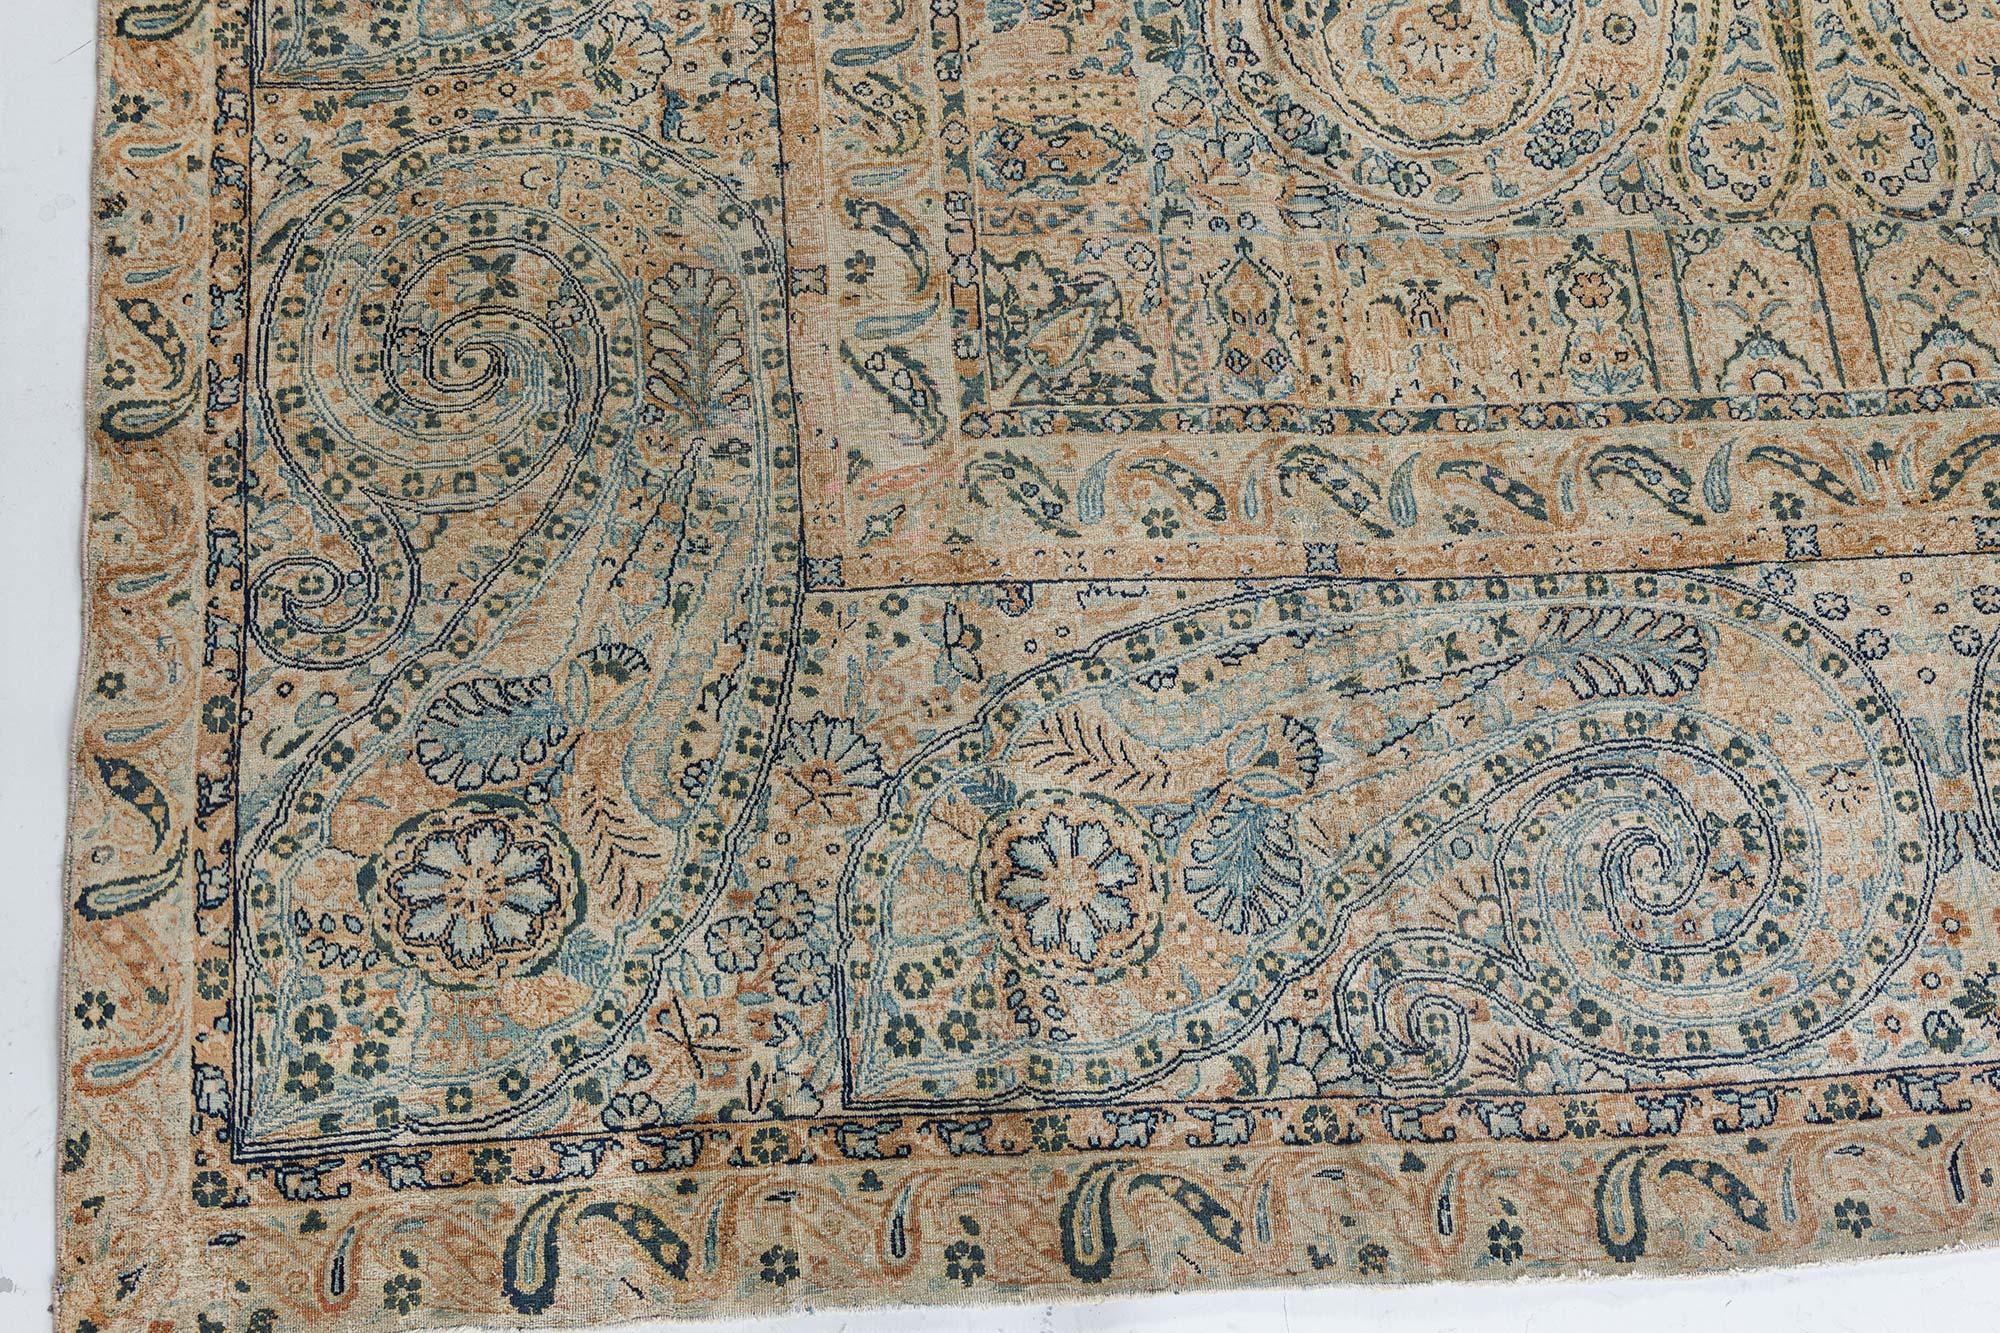 Antique Persian Kirman blue, green, beige handmade wool rug
Size: 10'4